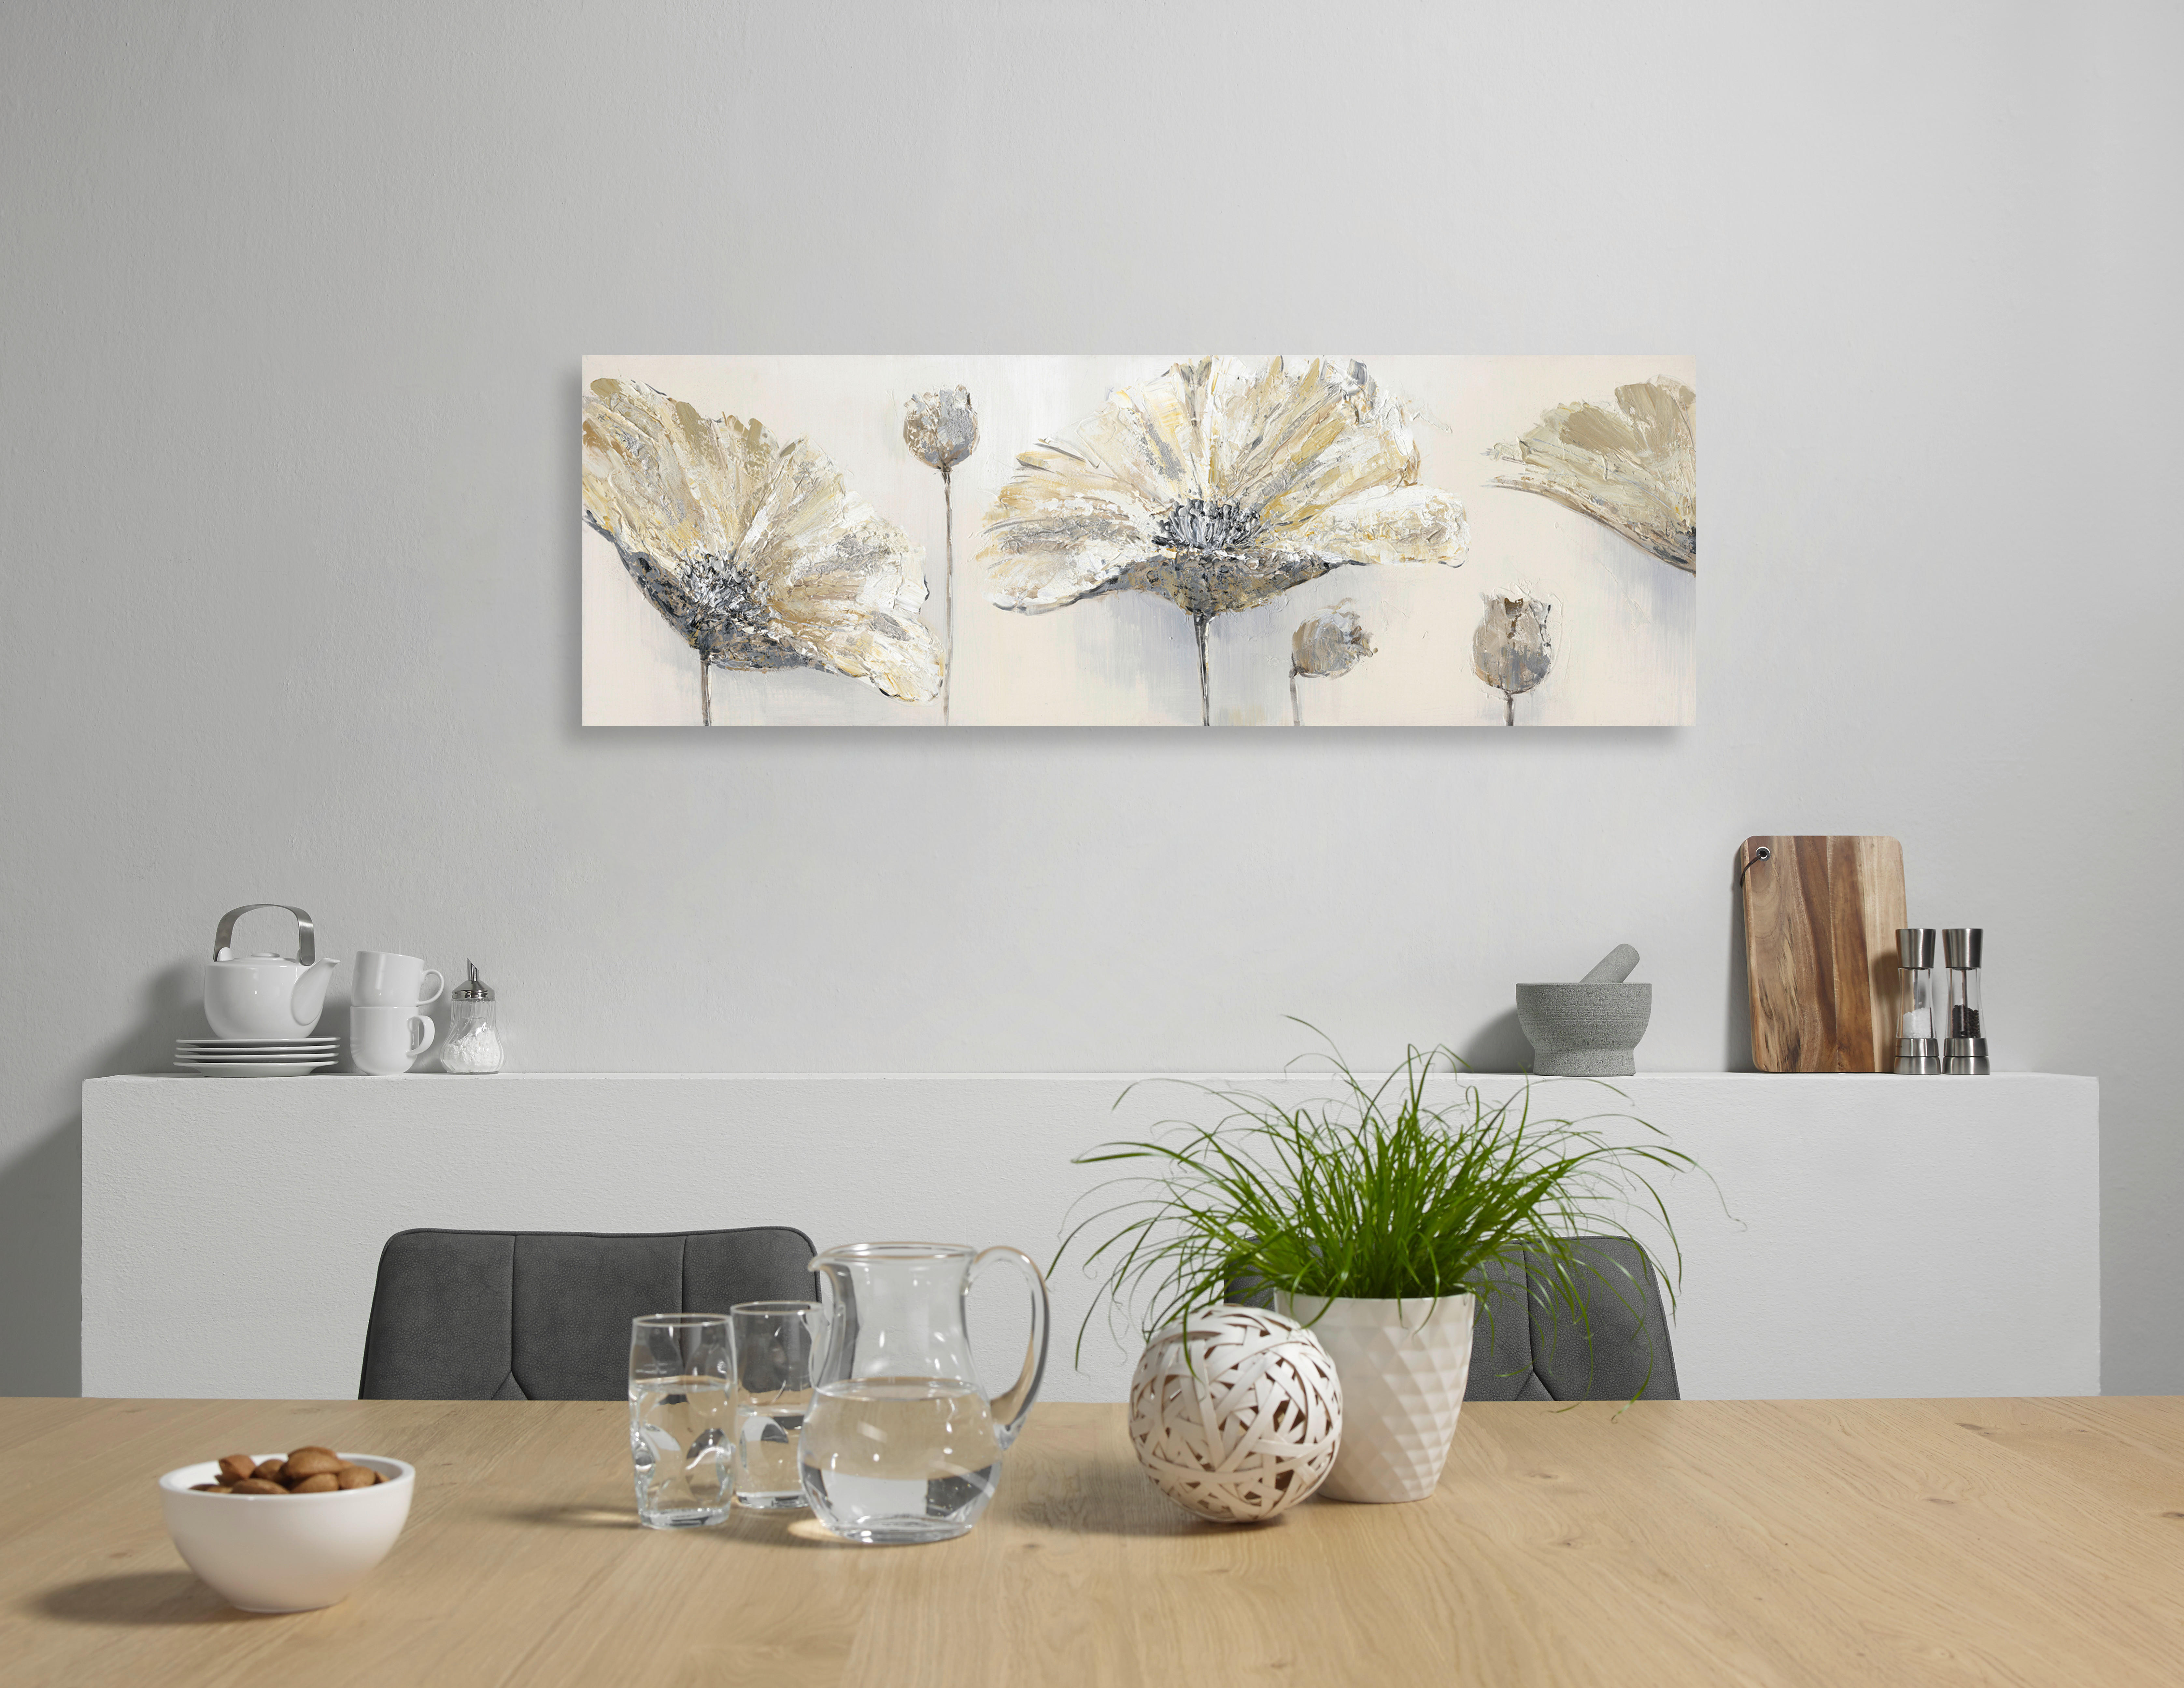 OLEJOMAĽBA, kvety, 150/55 cm  - hnedá/sivá, Lifestyle, drevo/textil (150/55cm) - Monee